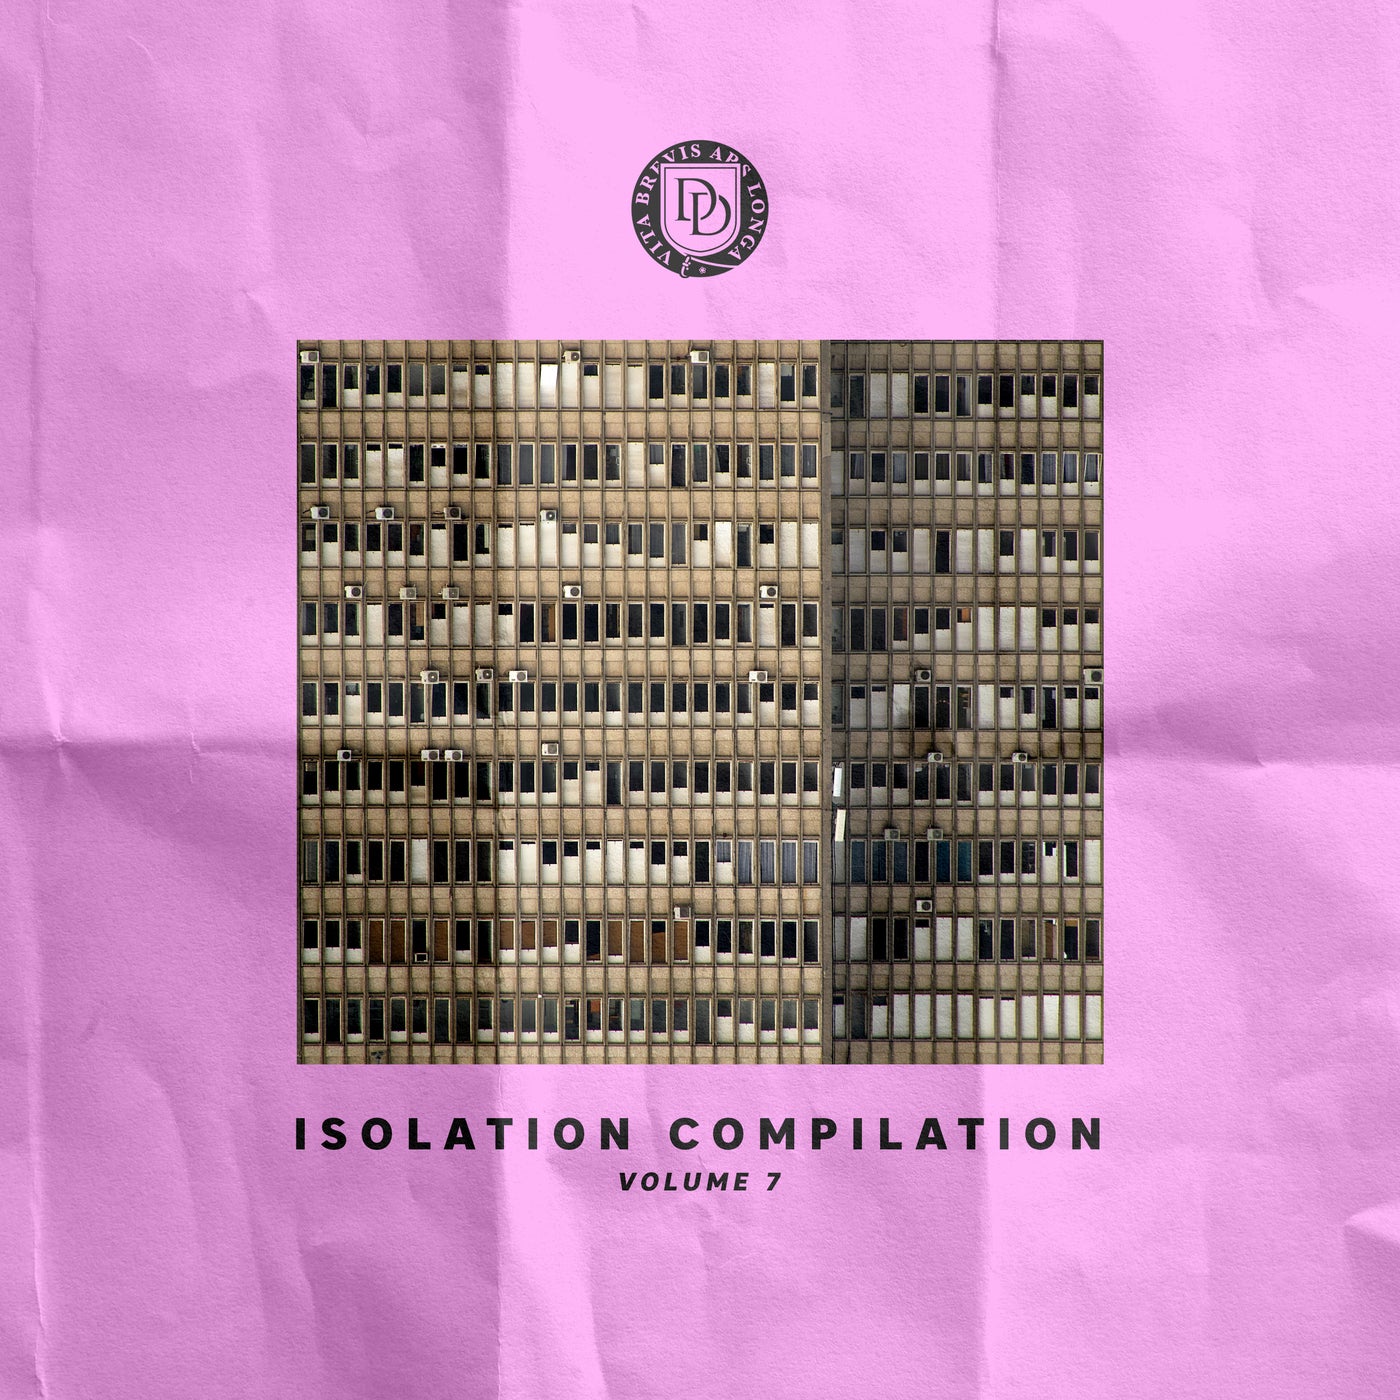 ISOLATION COMPILATION VOLUME 7